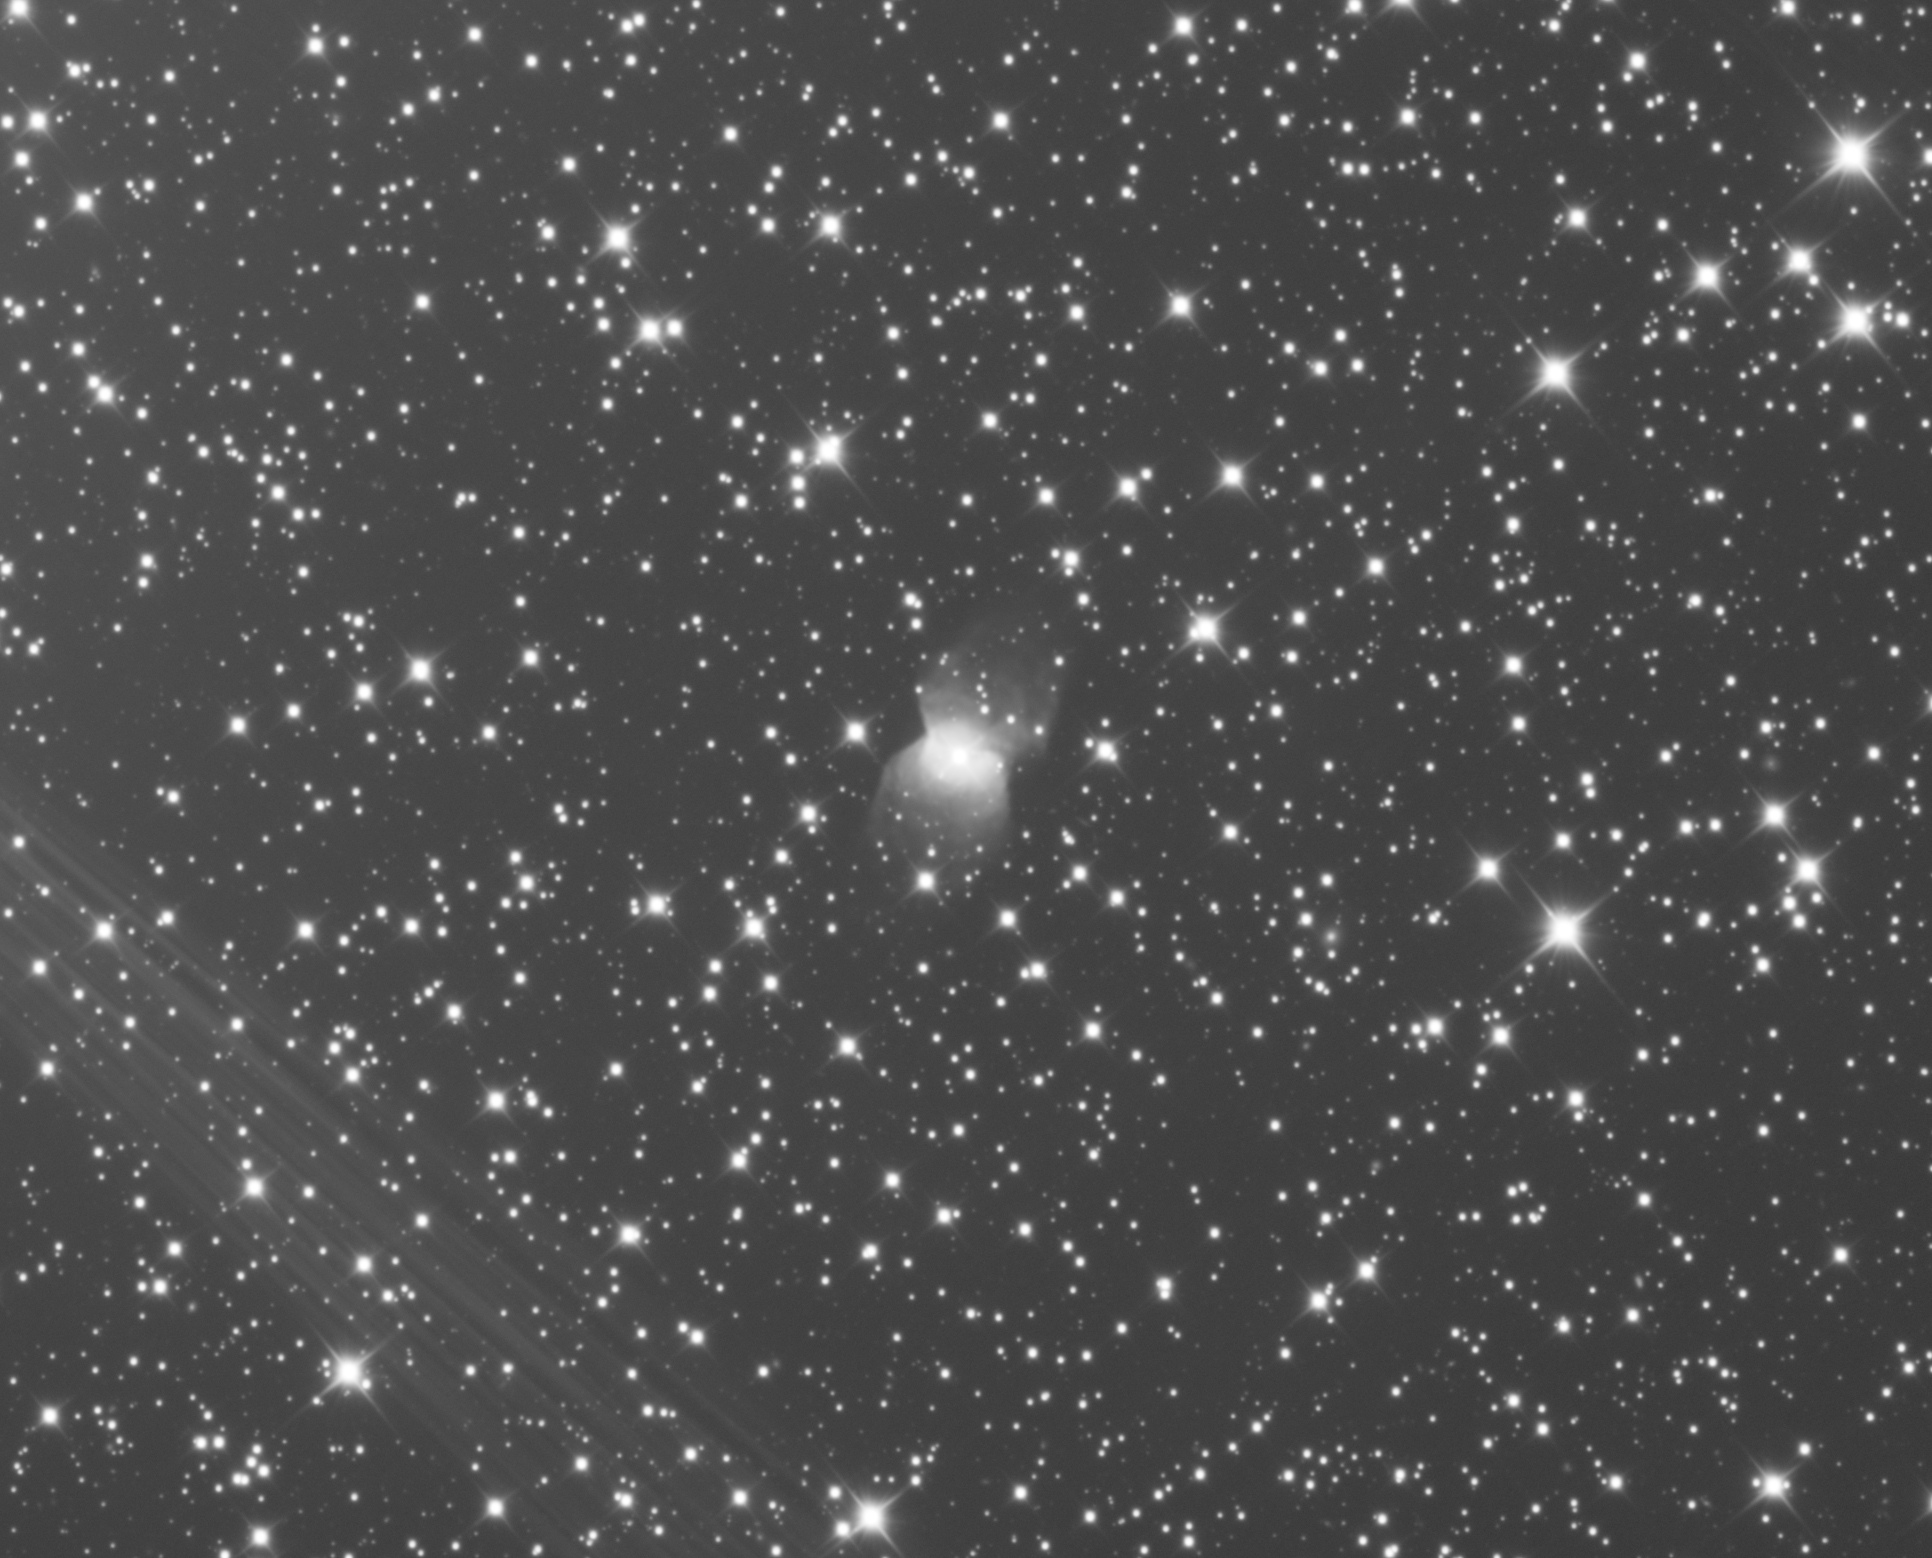 61f409a55ba0e_r_NGC2346Lhistomax.jpg.e9ba3911398005458647022802afdbe2.jpg